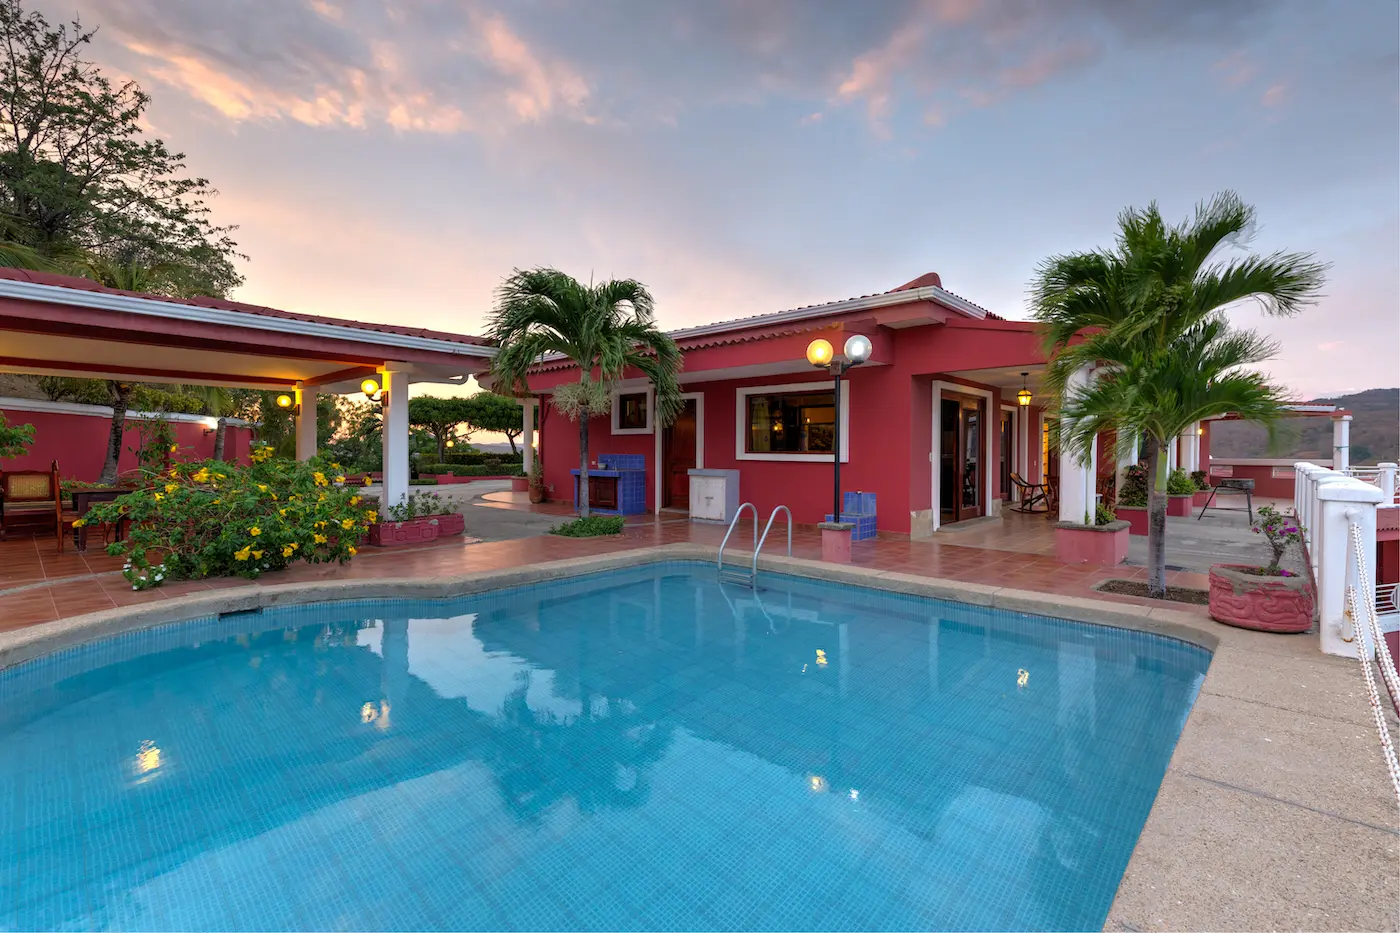 Cliff-Top-Home-in-Pacific-Marlin-Invest-Nicaragua-Real-Estate-San-Juan-del-Sur-Tola-21.jpg.jpg